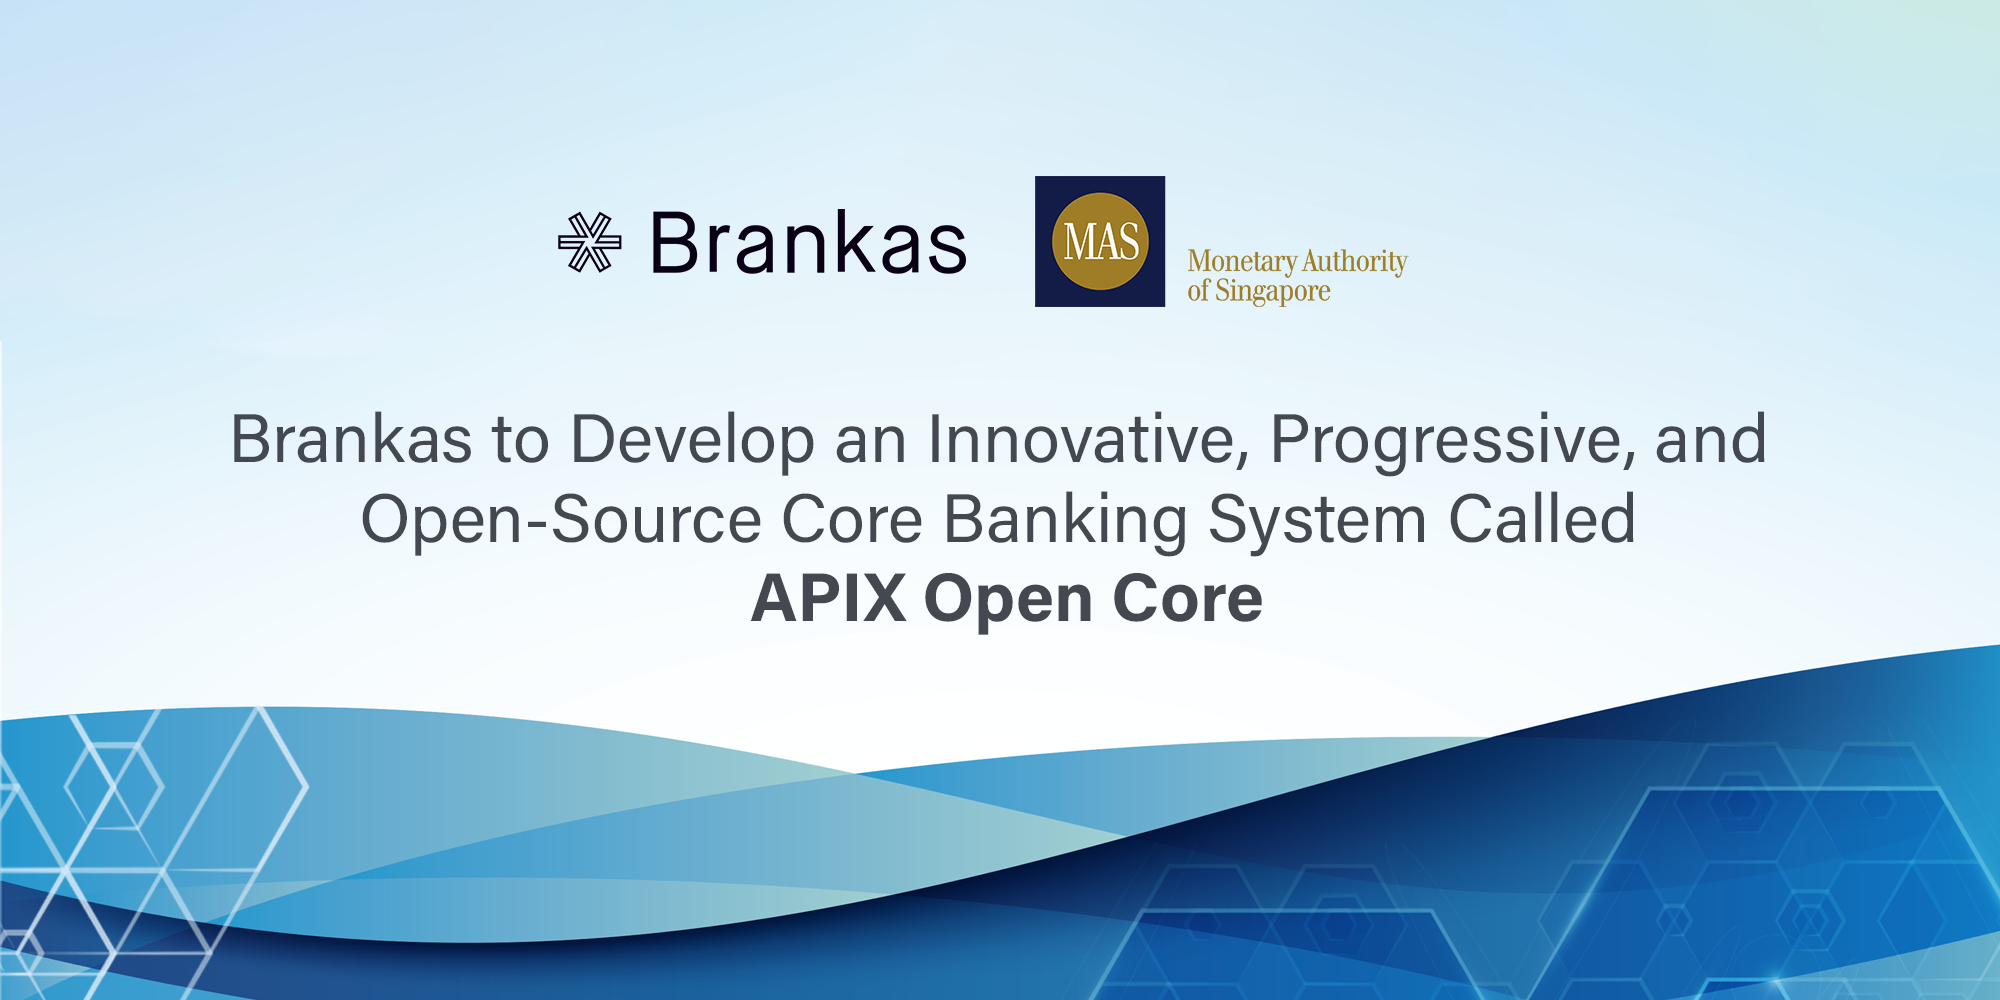 Brankas Develops an Innovative, Open-Source Core Banking System